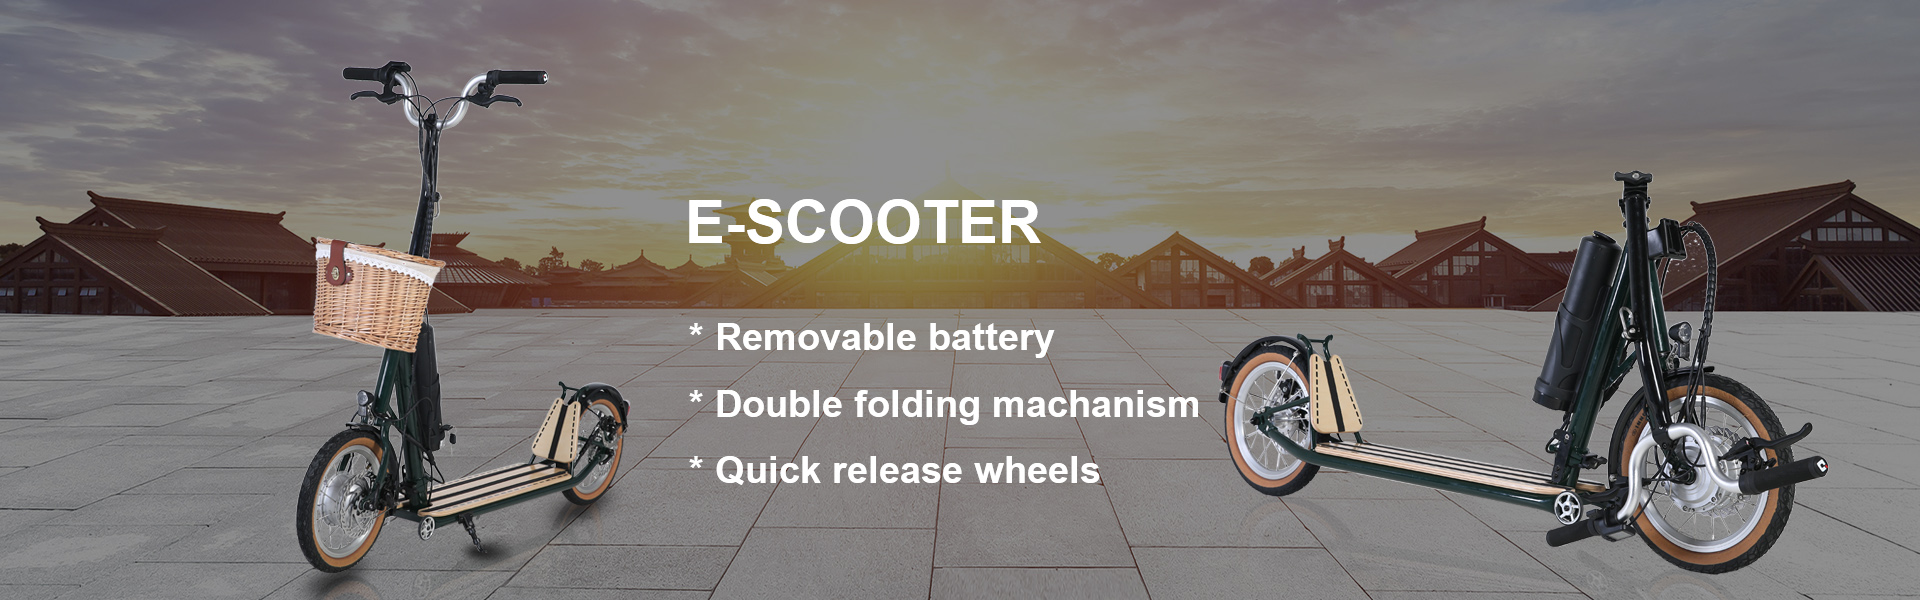 Elektrikli Scooter, Trottinette Électrique, Scooter elettrico,SHENZHEN HAPPY-GO INTELLIGENT TECHNOLOGY CO.,LTD